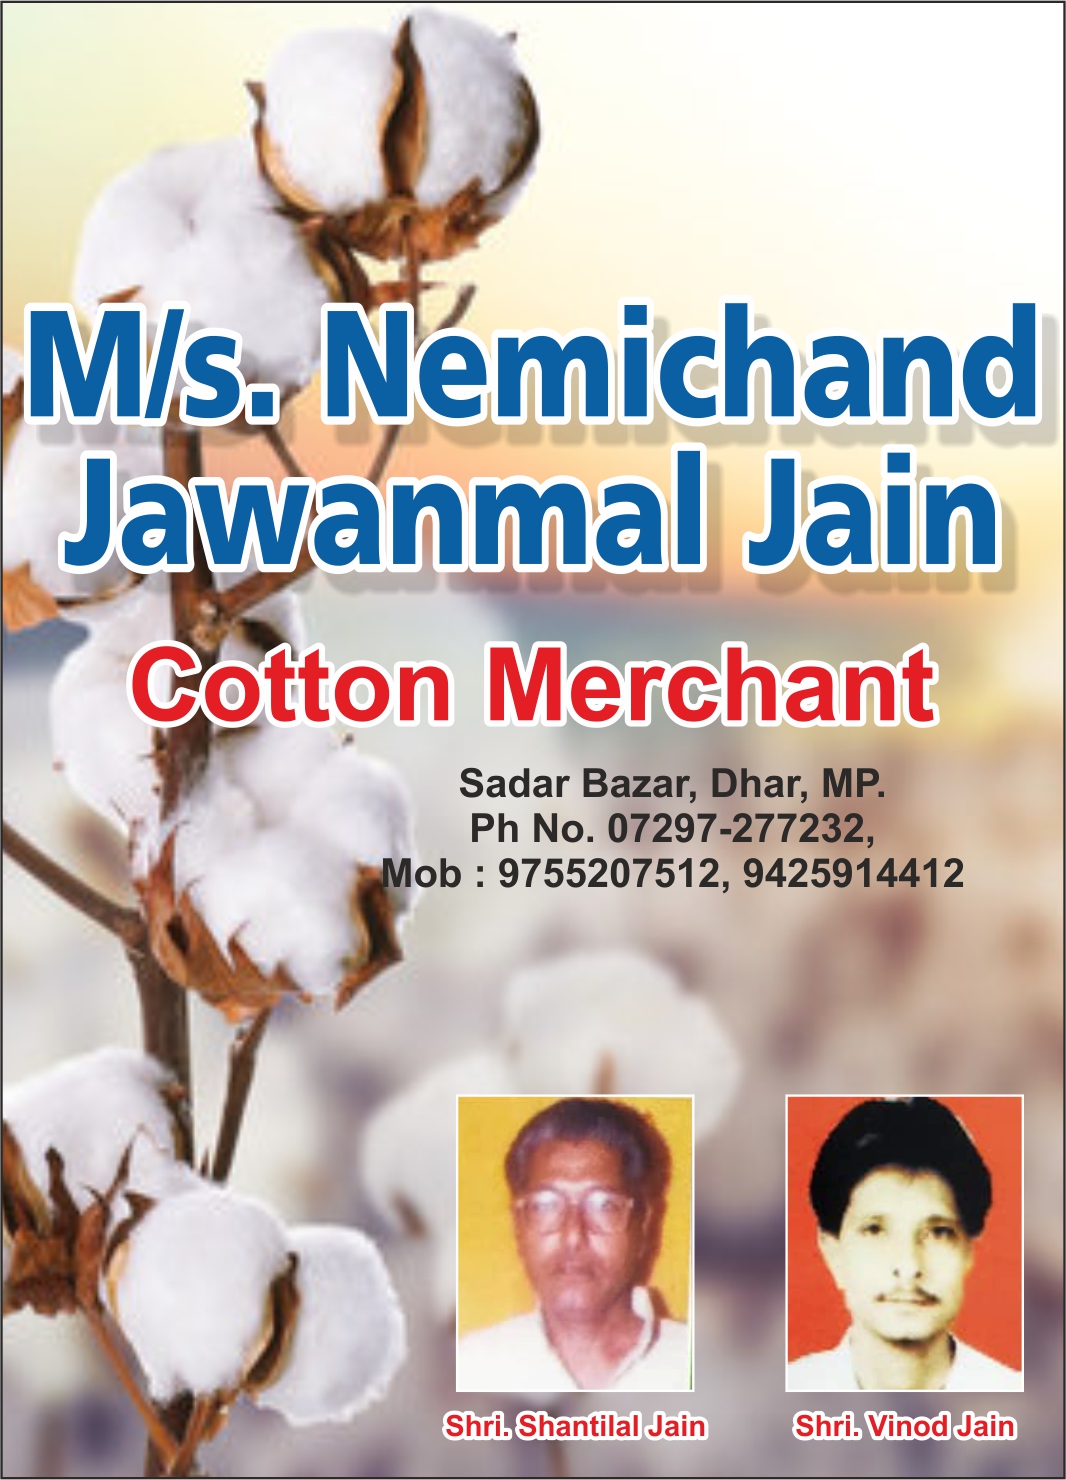 M/s Nemichand Jawanmal Jain